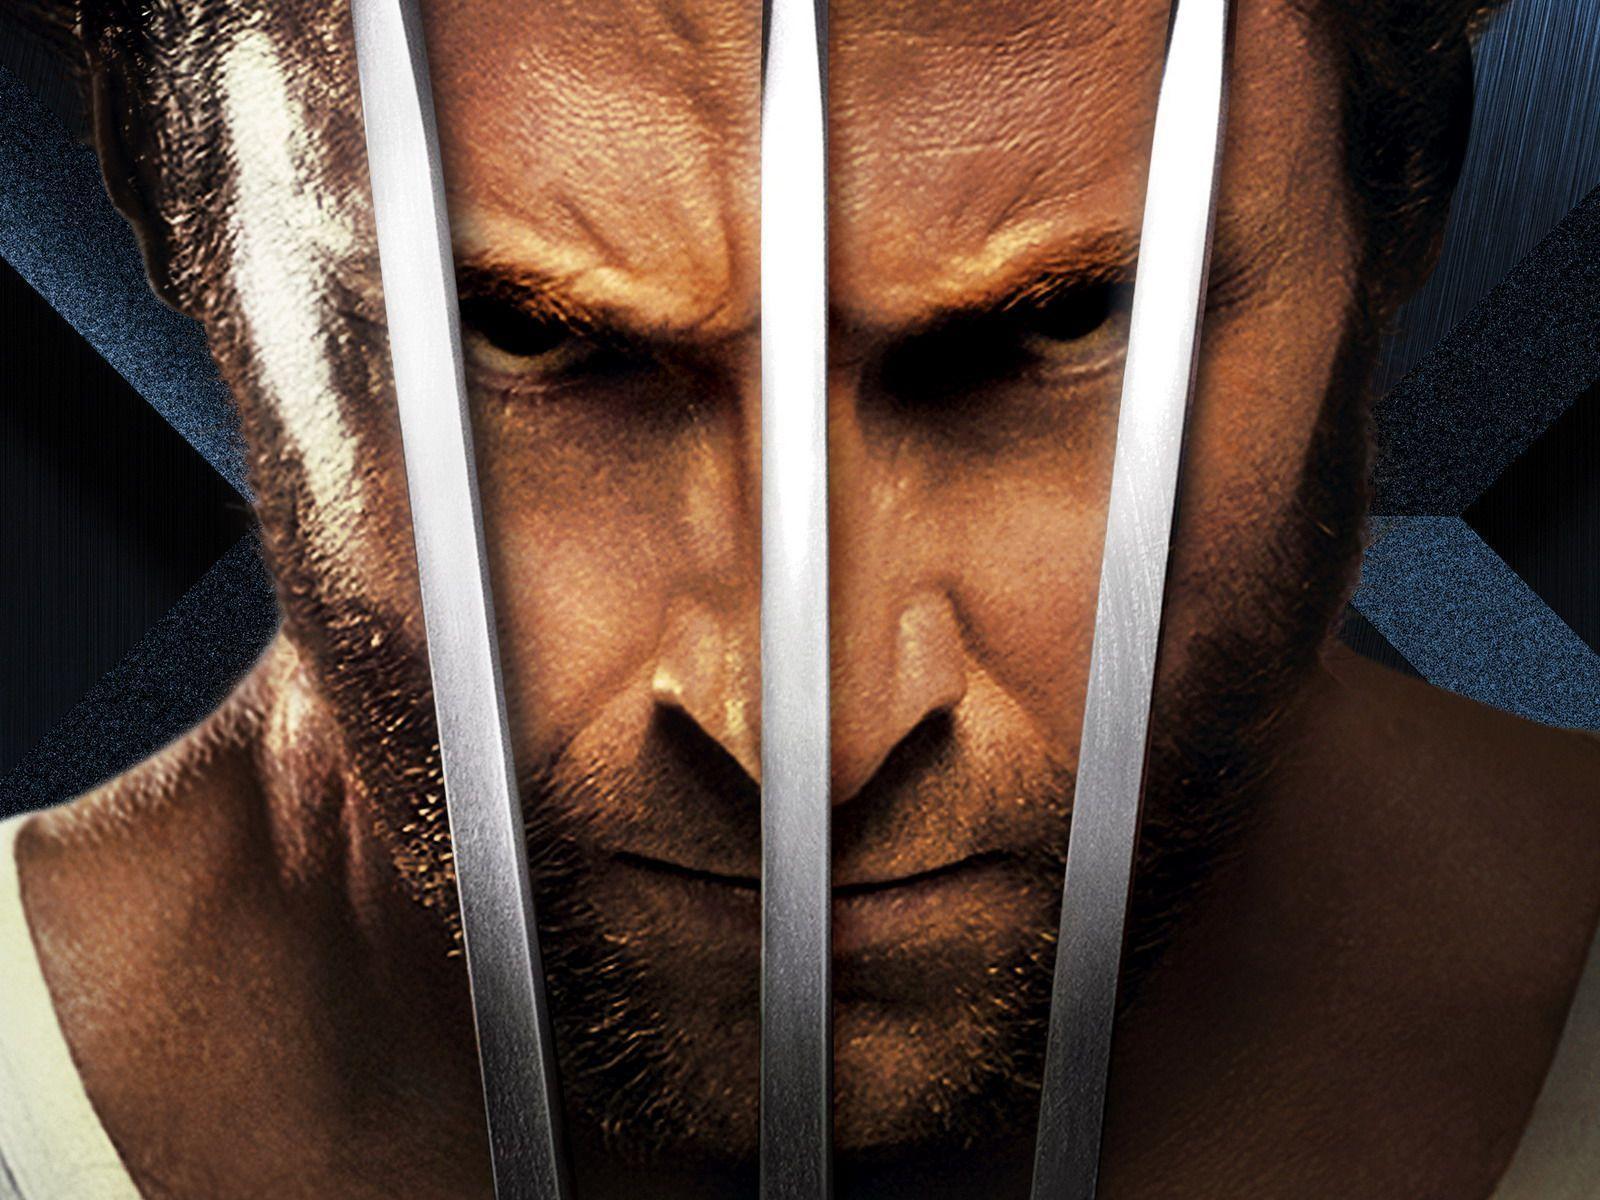 X Men Origins: Wolverine Photo Wallpaper Widescreen